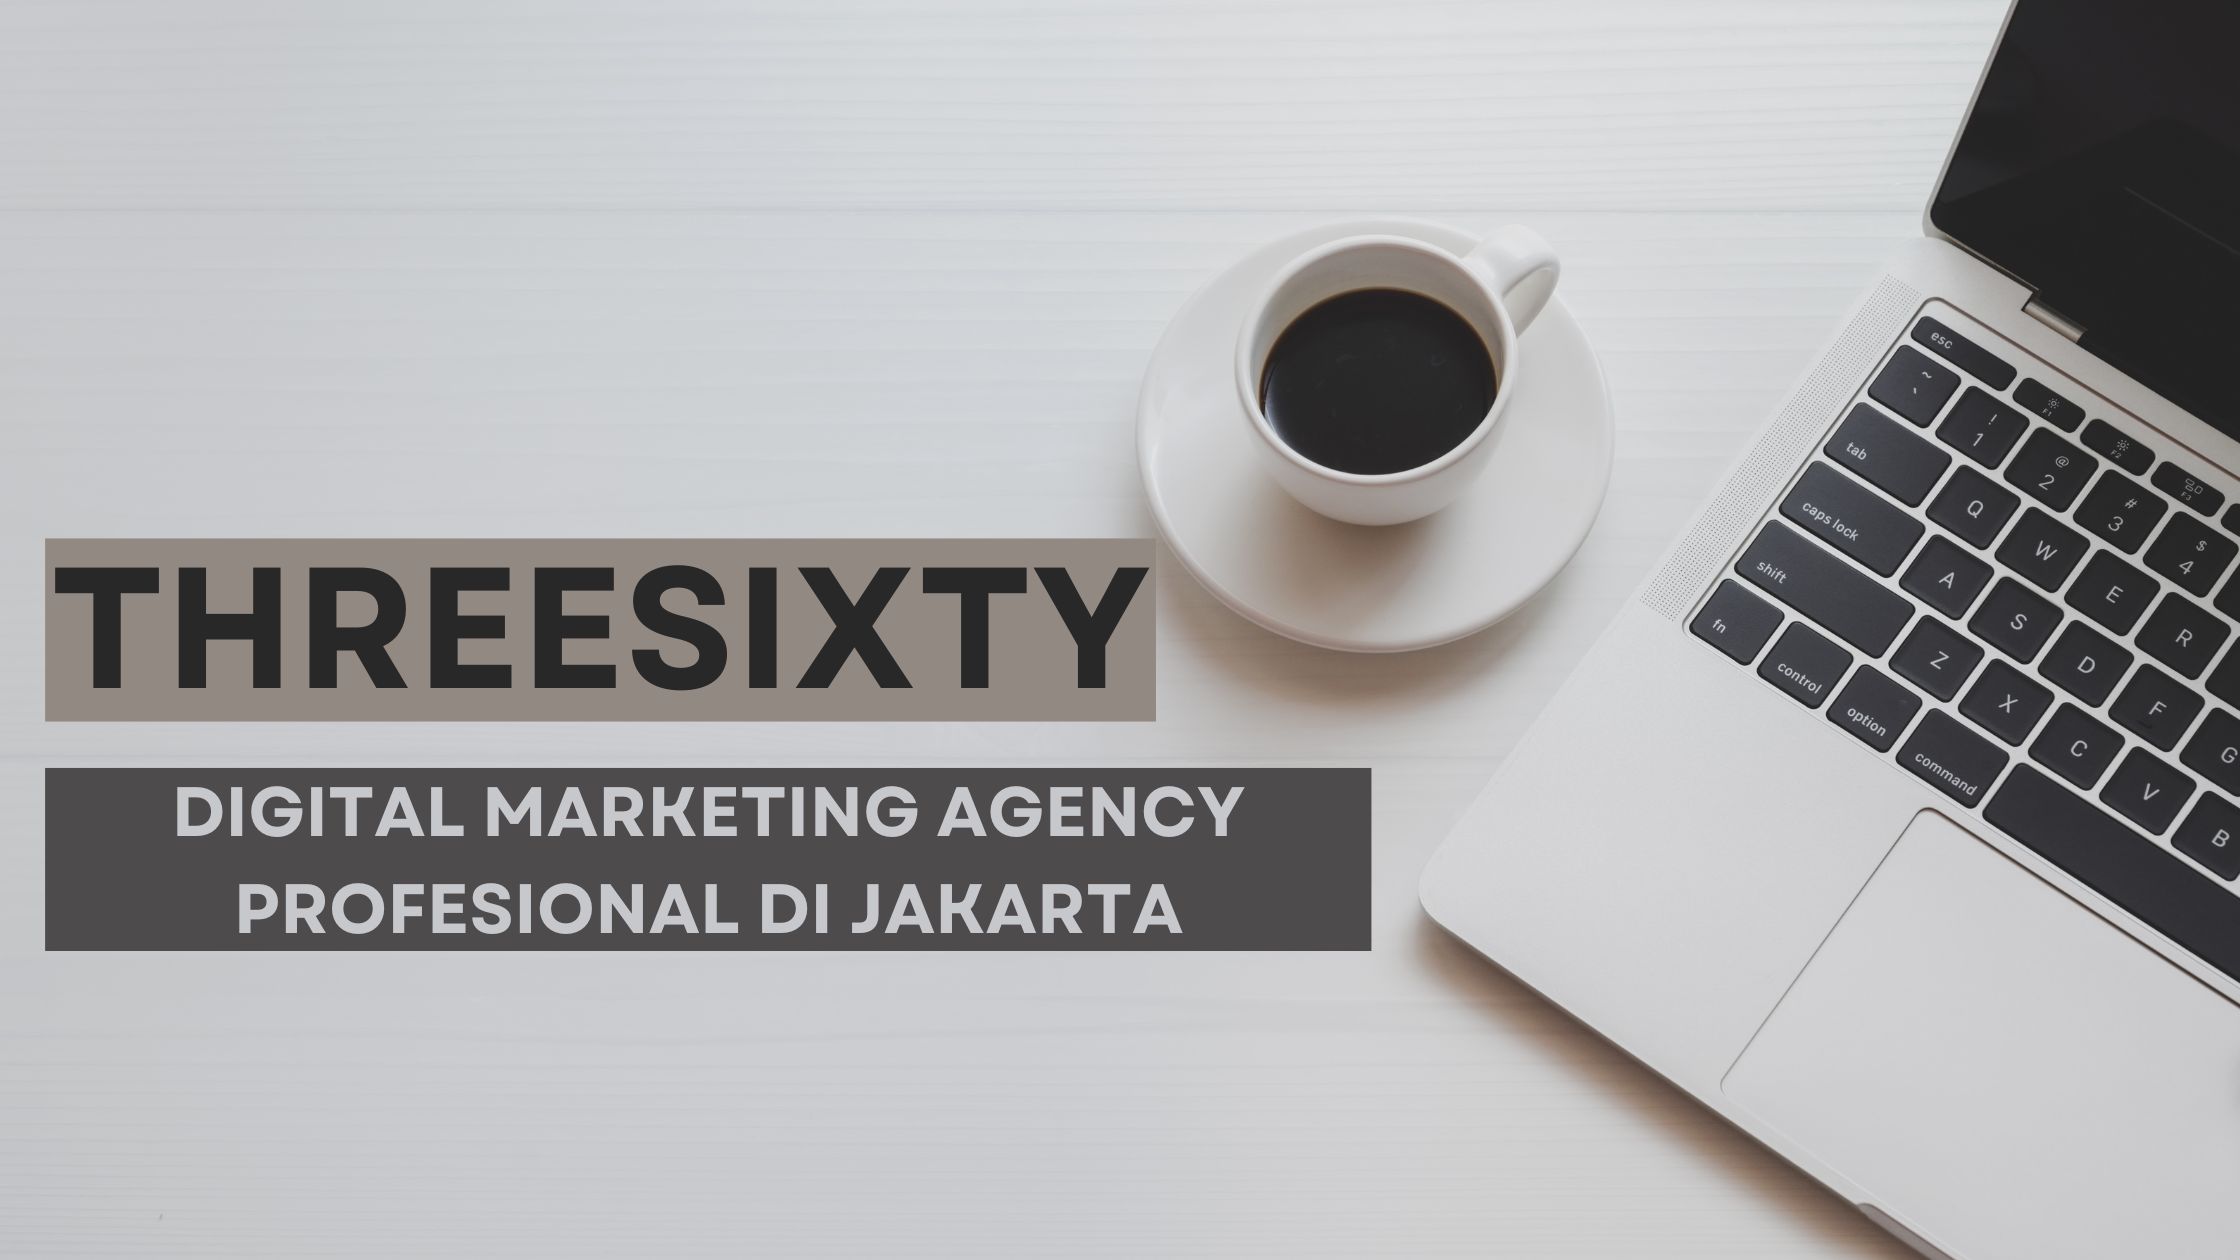 Threesixty, Digital Marketing Agency Profesional di Jakarta